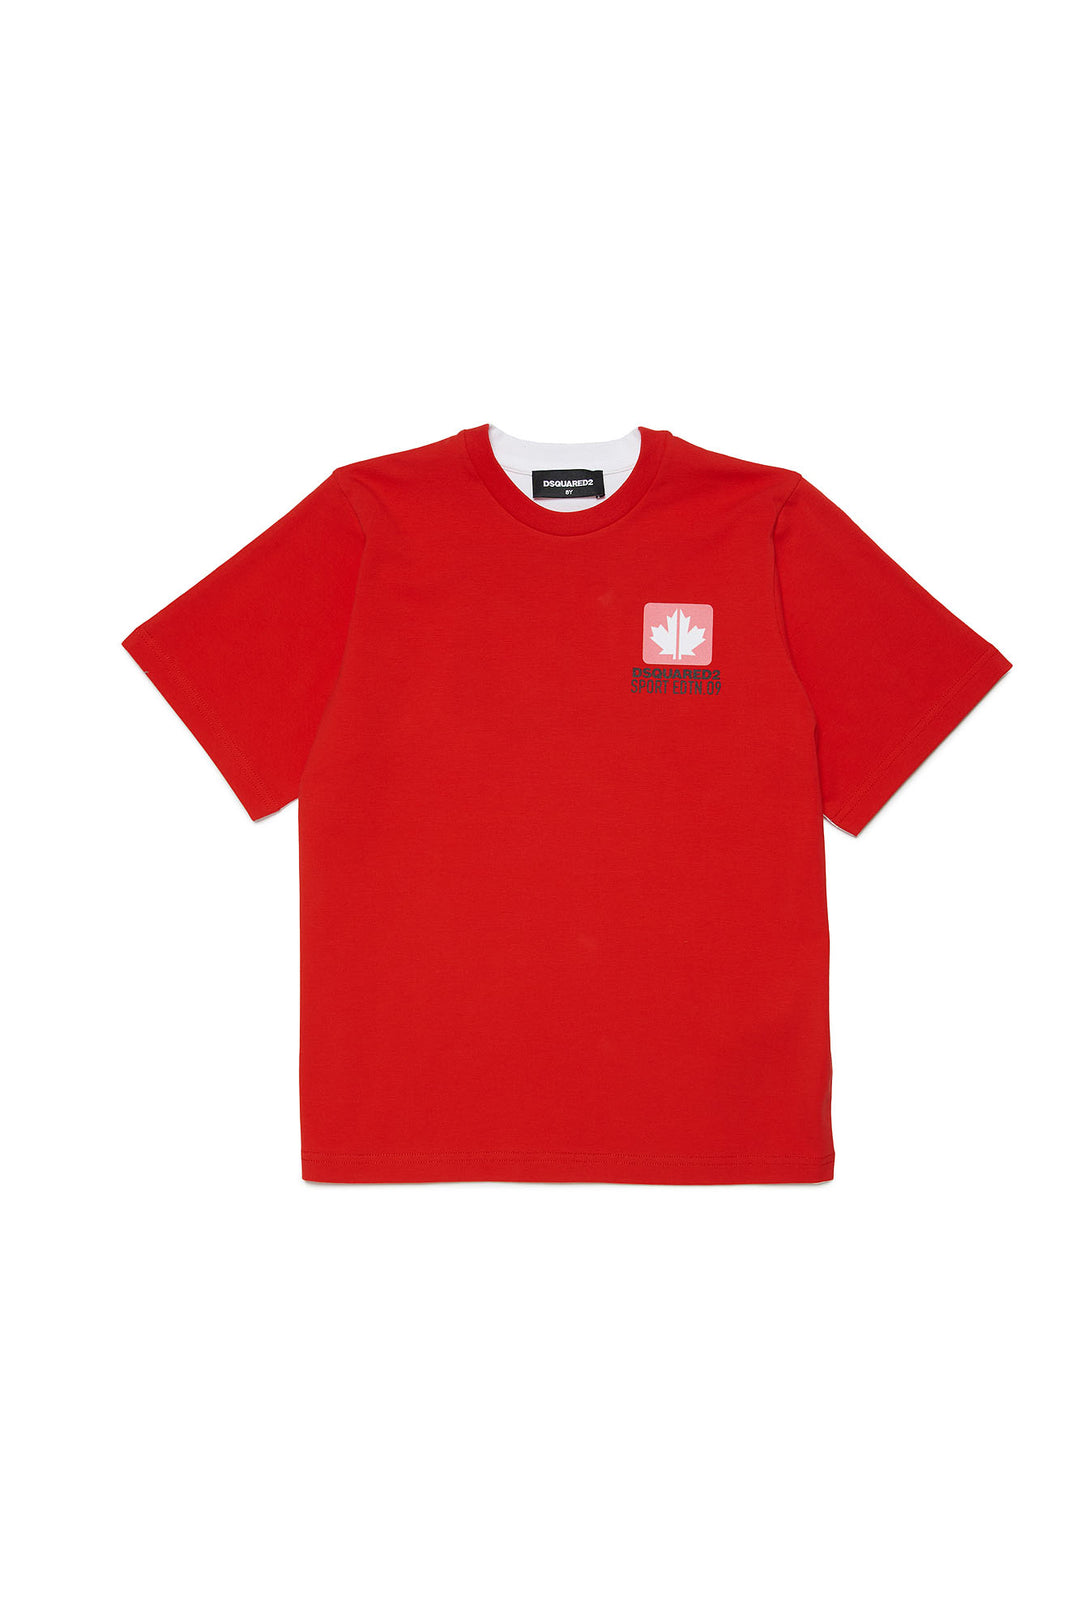 T-shirt rossa unisex